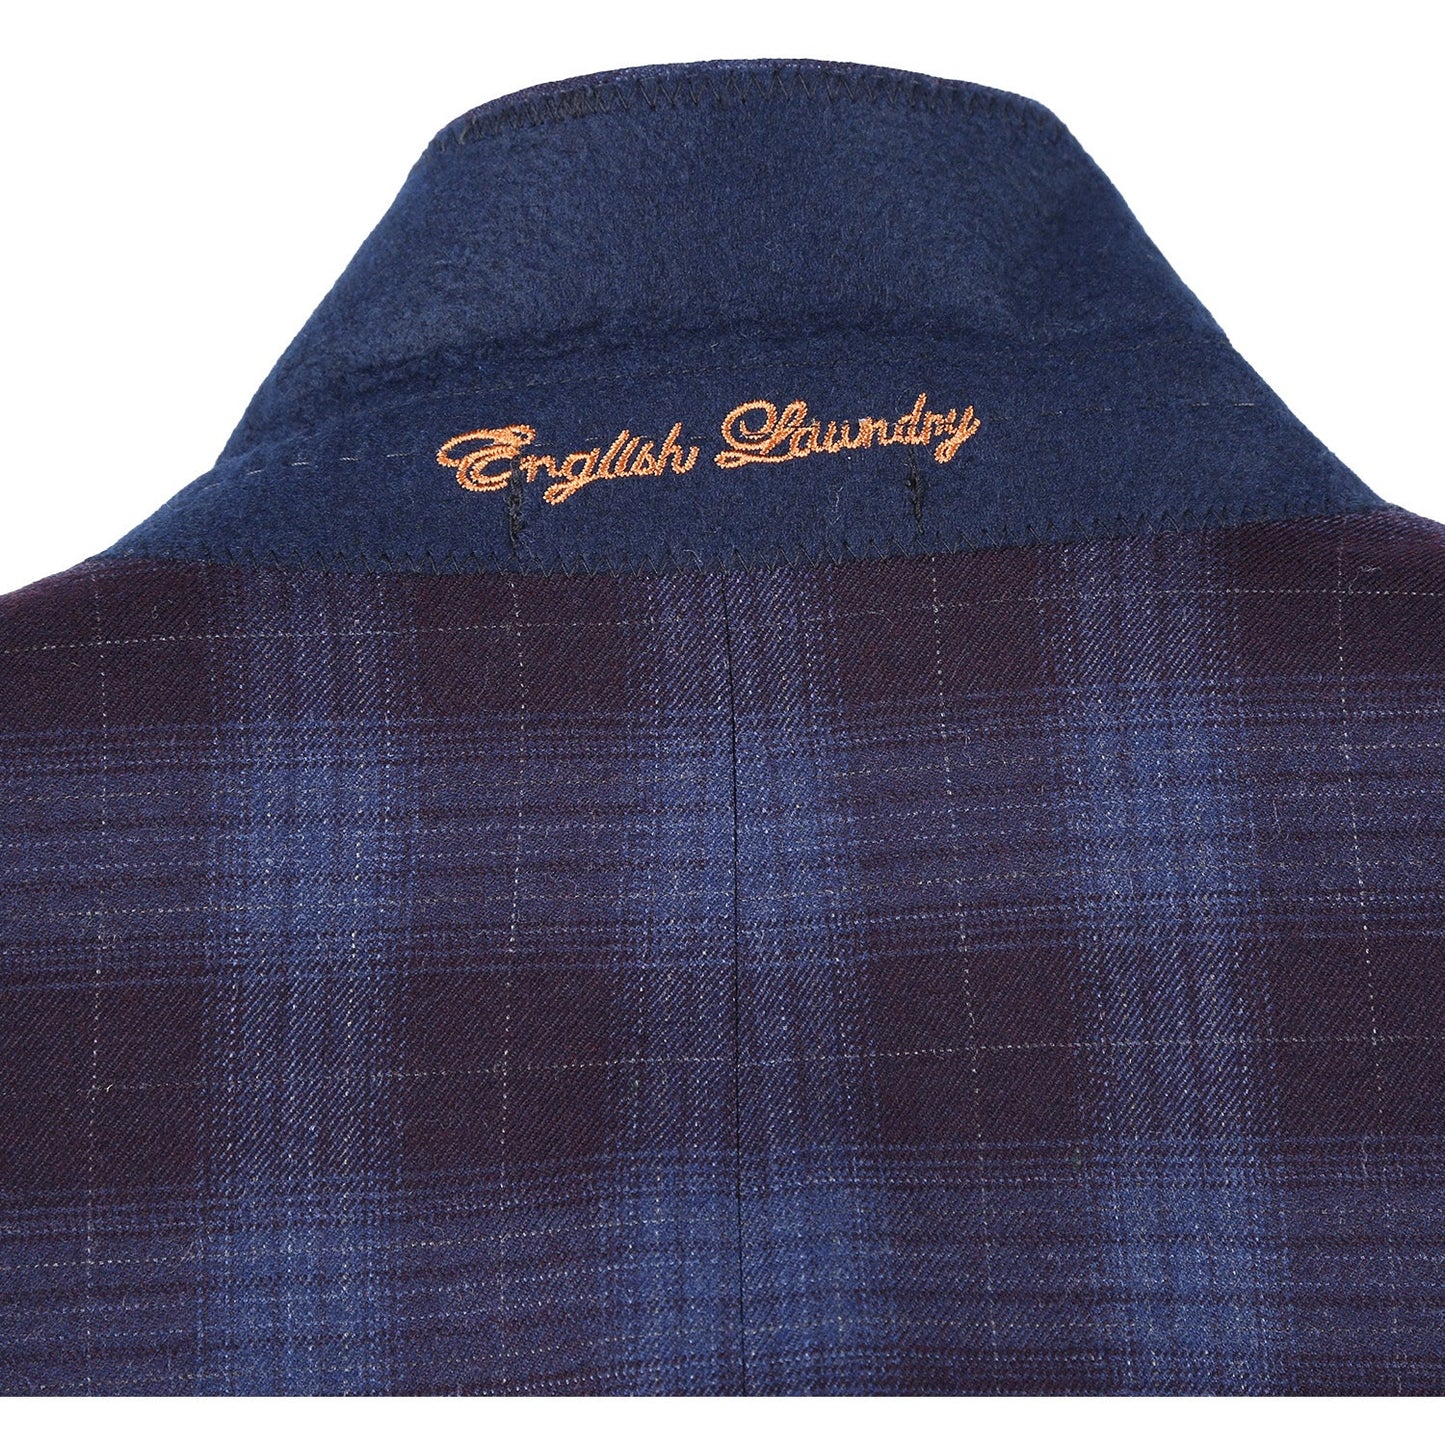 EL62-67-750 English Laundry Slim Fit Wine/Blue Plaid Wool Blend Suit